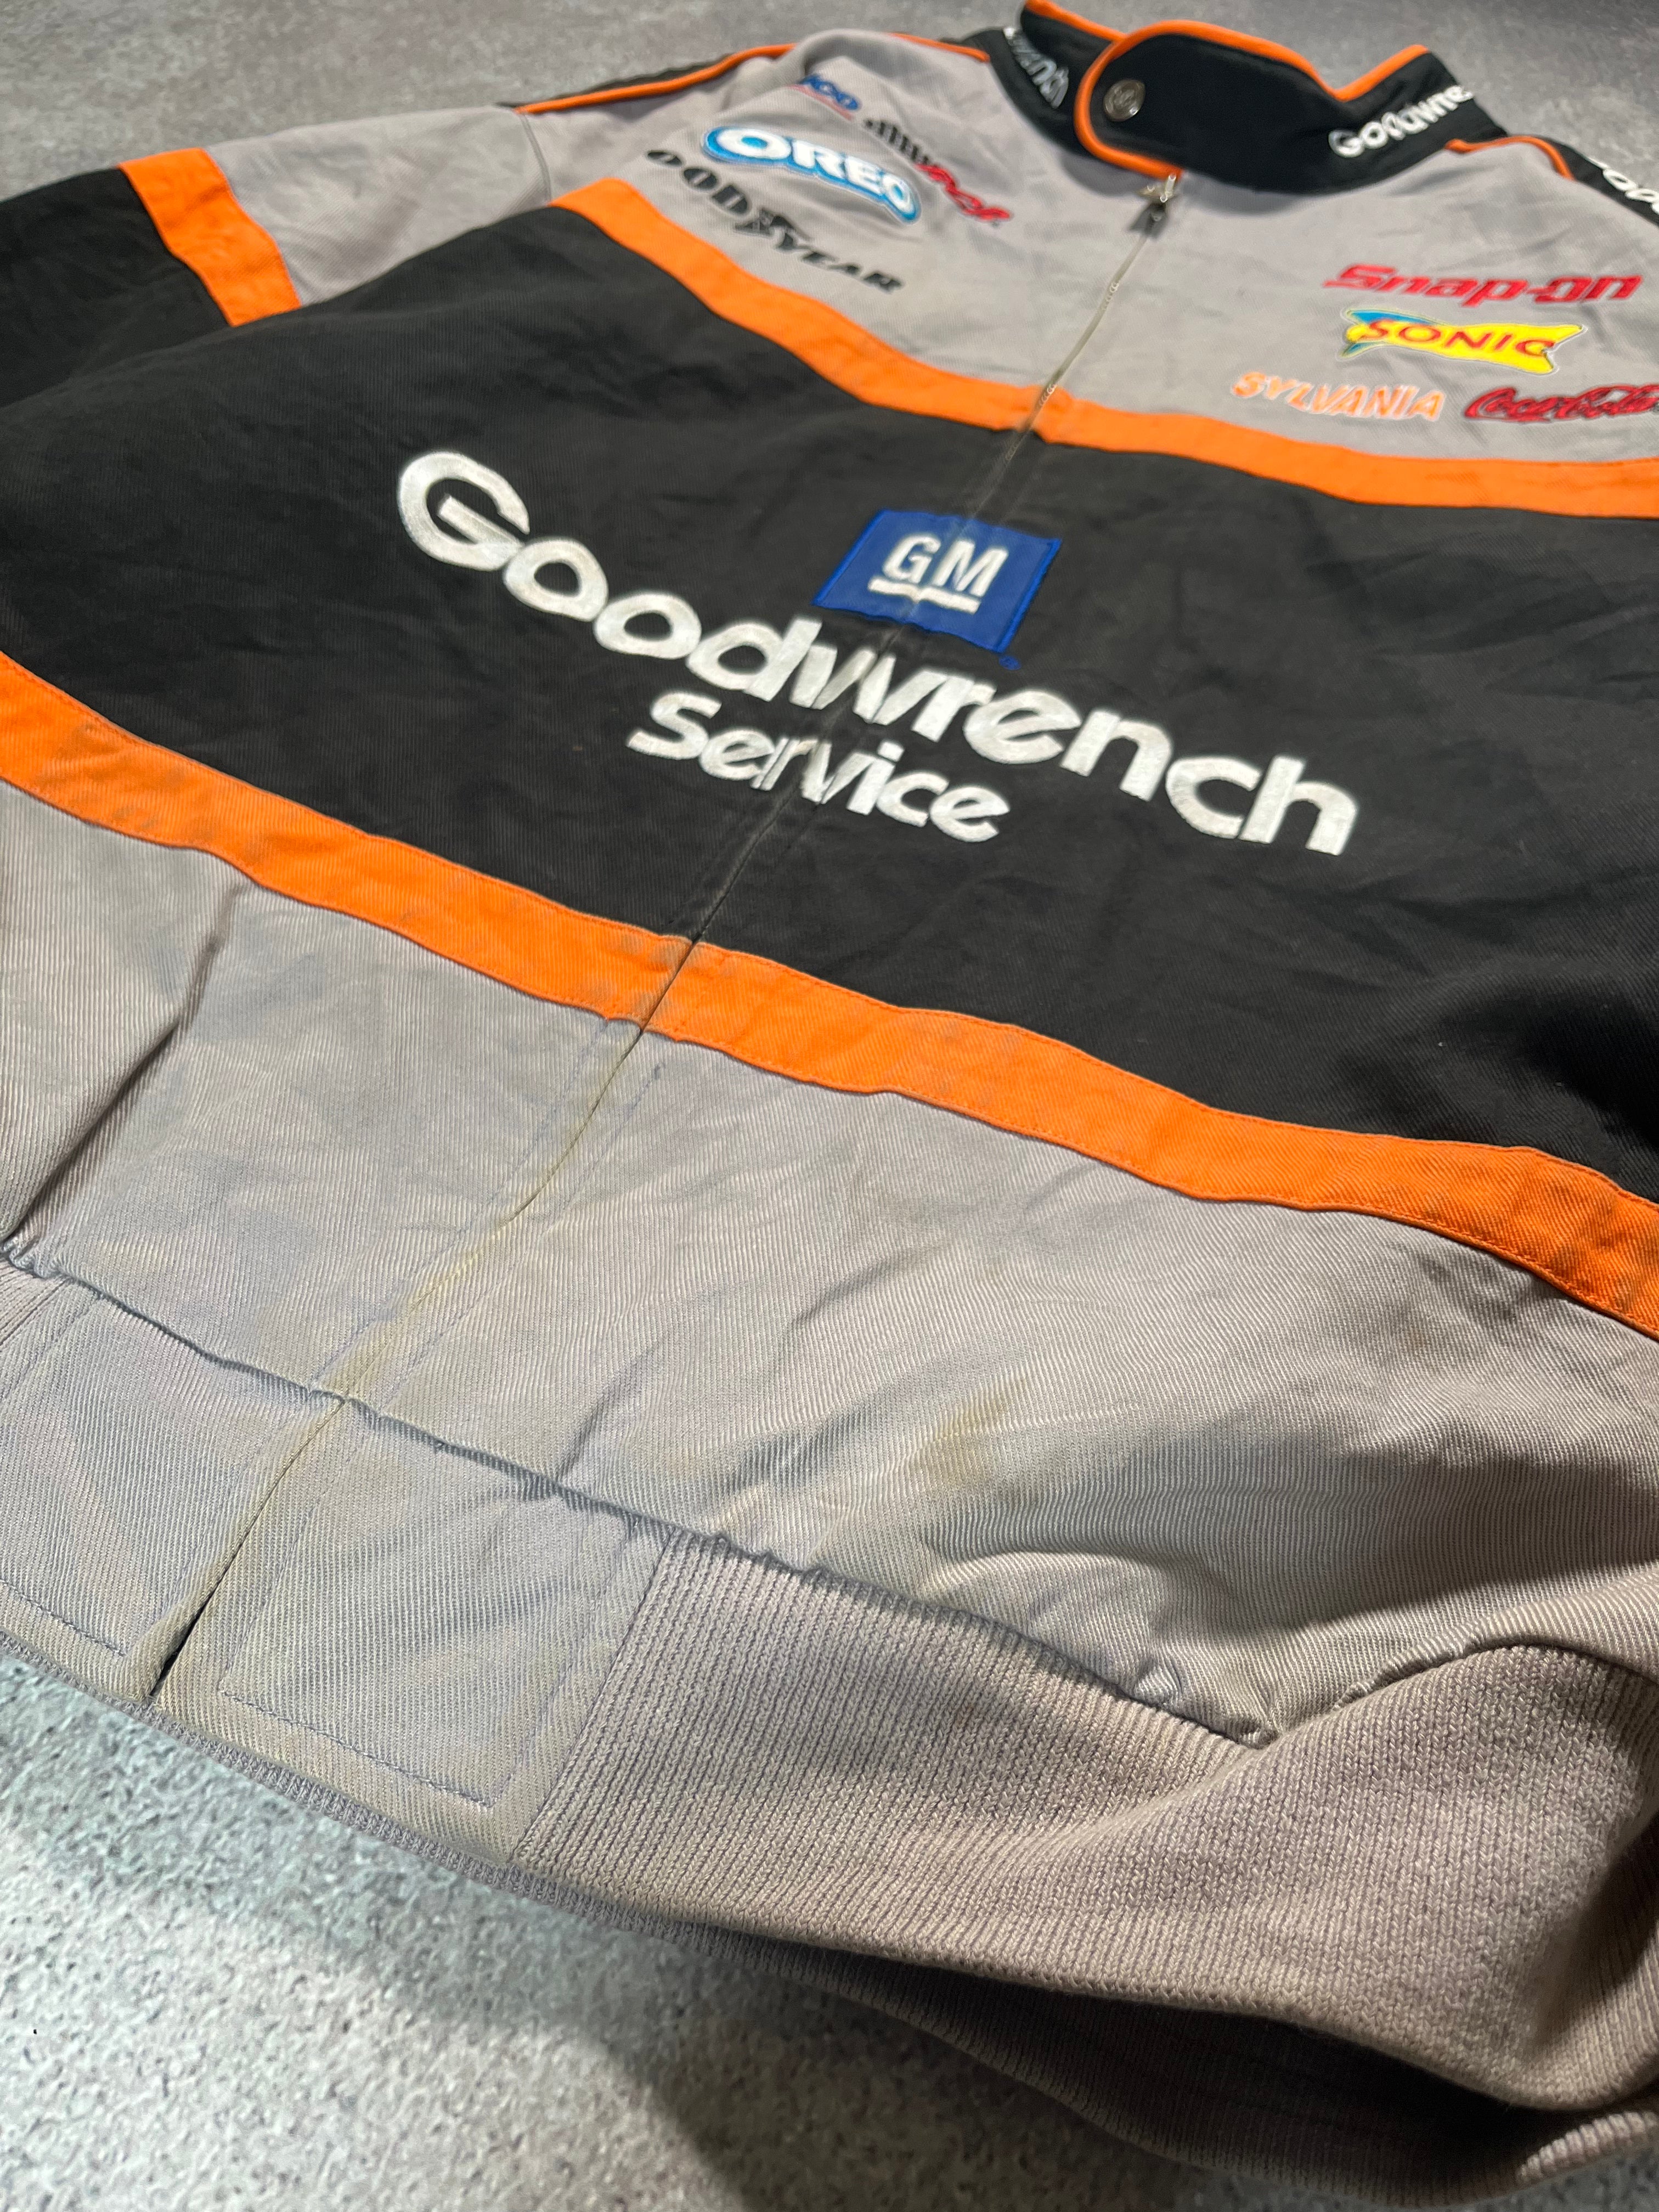 Racing Jacket Goodwrench Service Multicolor // Medium - RHAGHOUSE VINTAGE